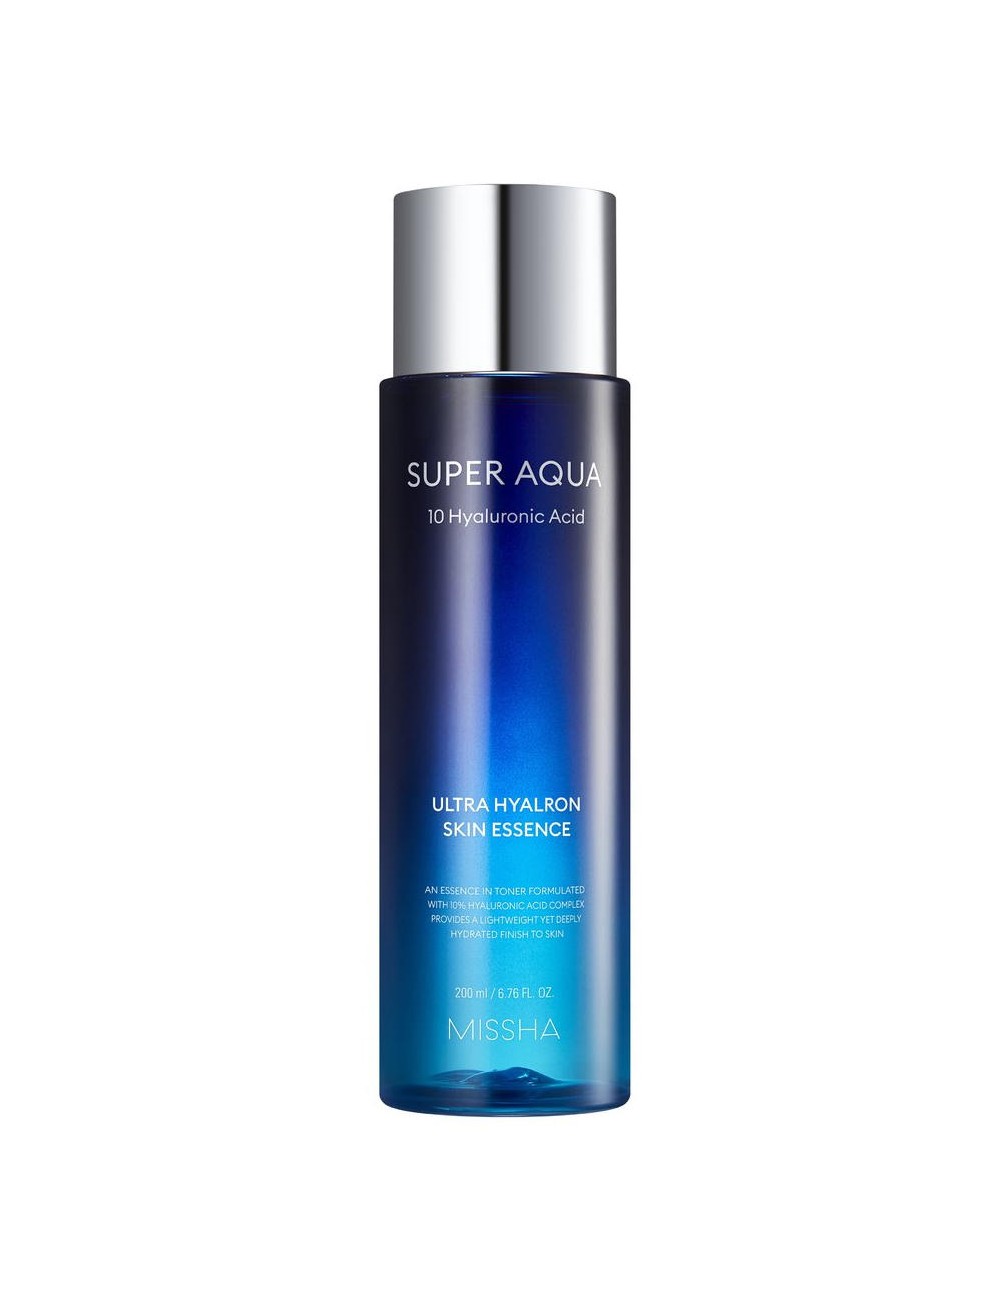 Cosmética Coreana al mejor precio: Super Aqua Ultra Hyalron Skin Essence de Missha en Skin Thinks - Piel Seca